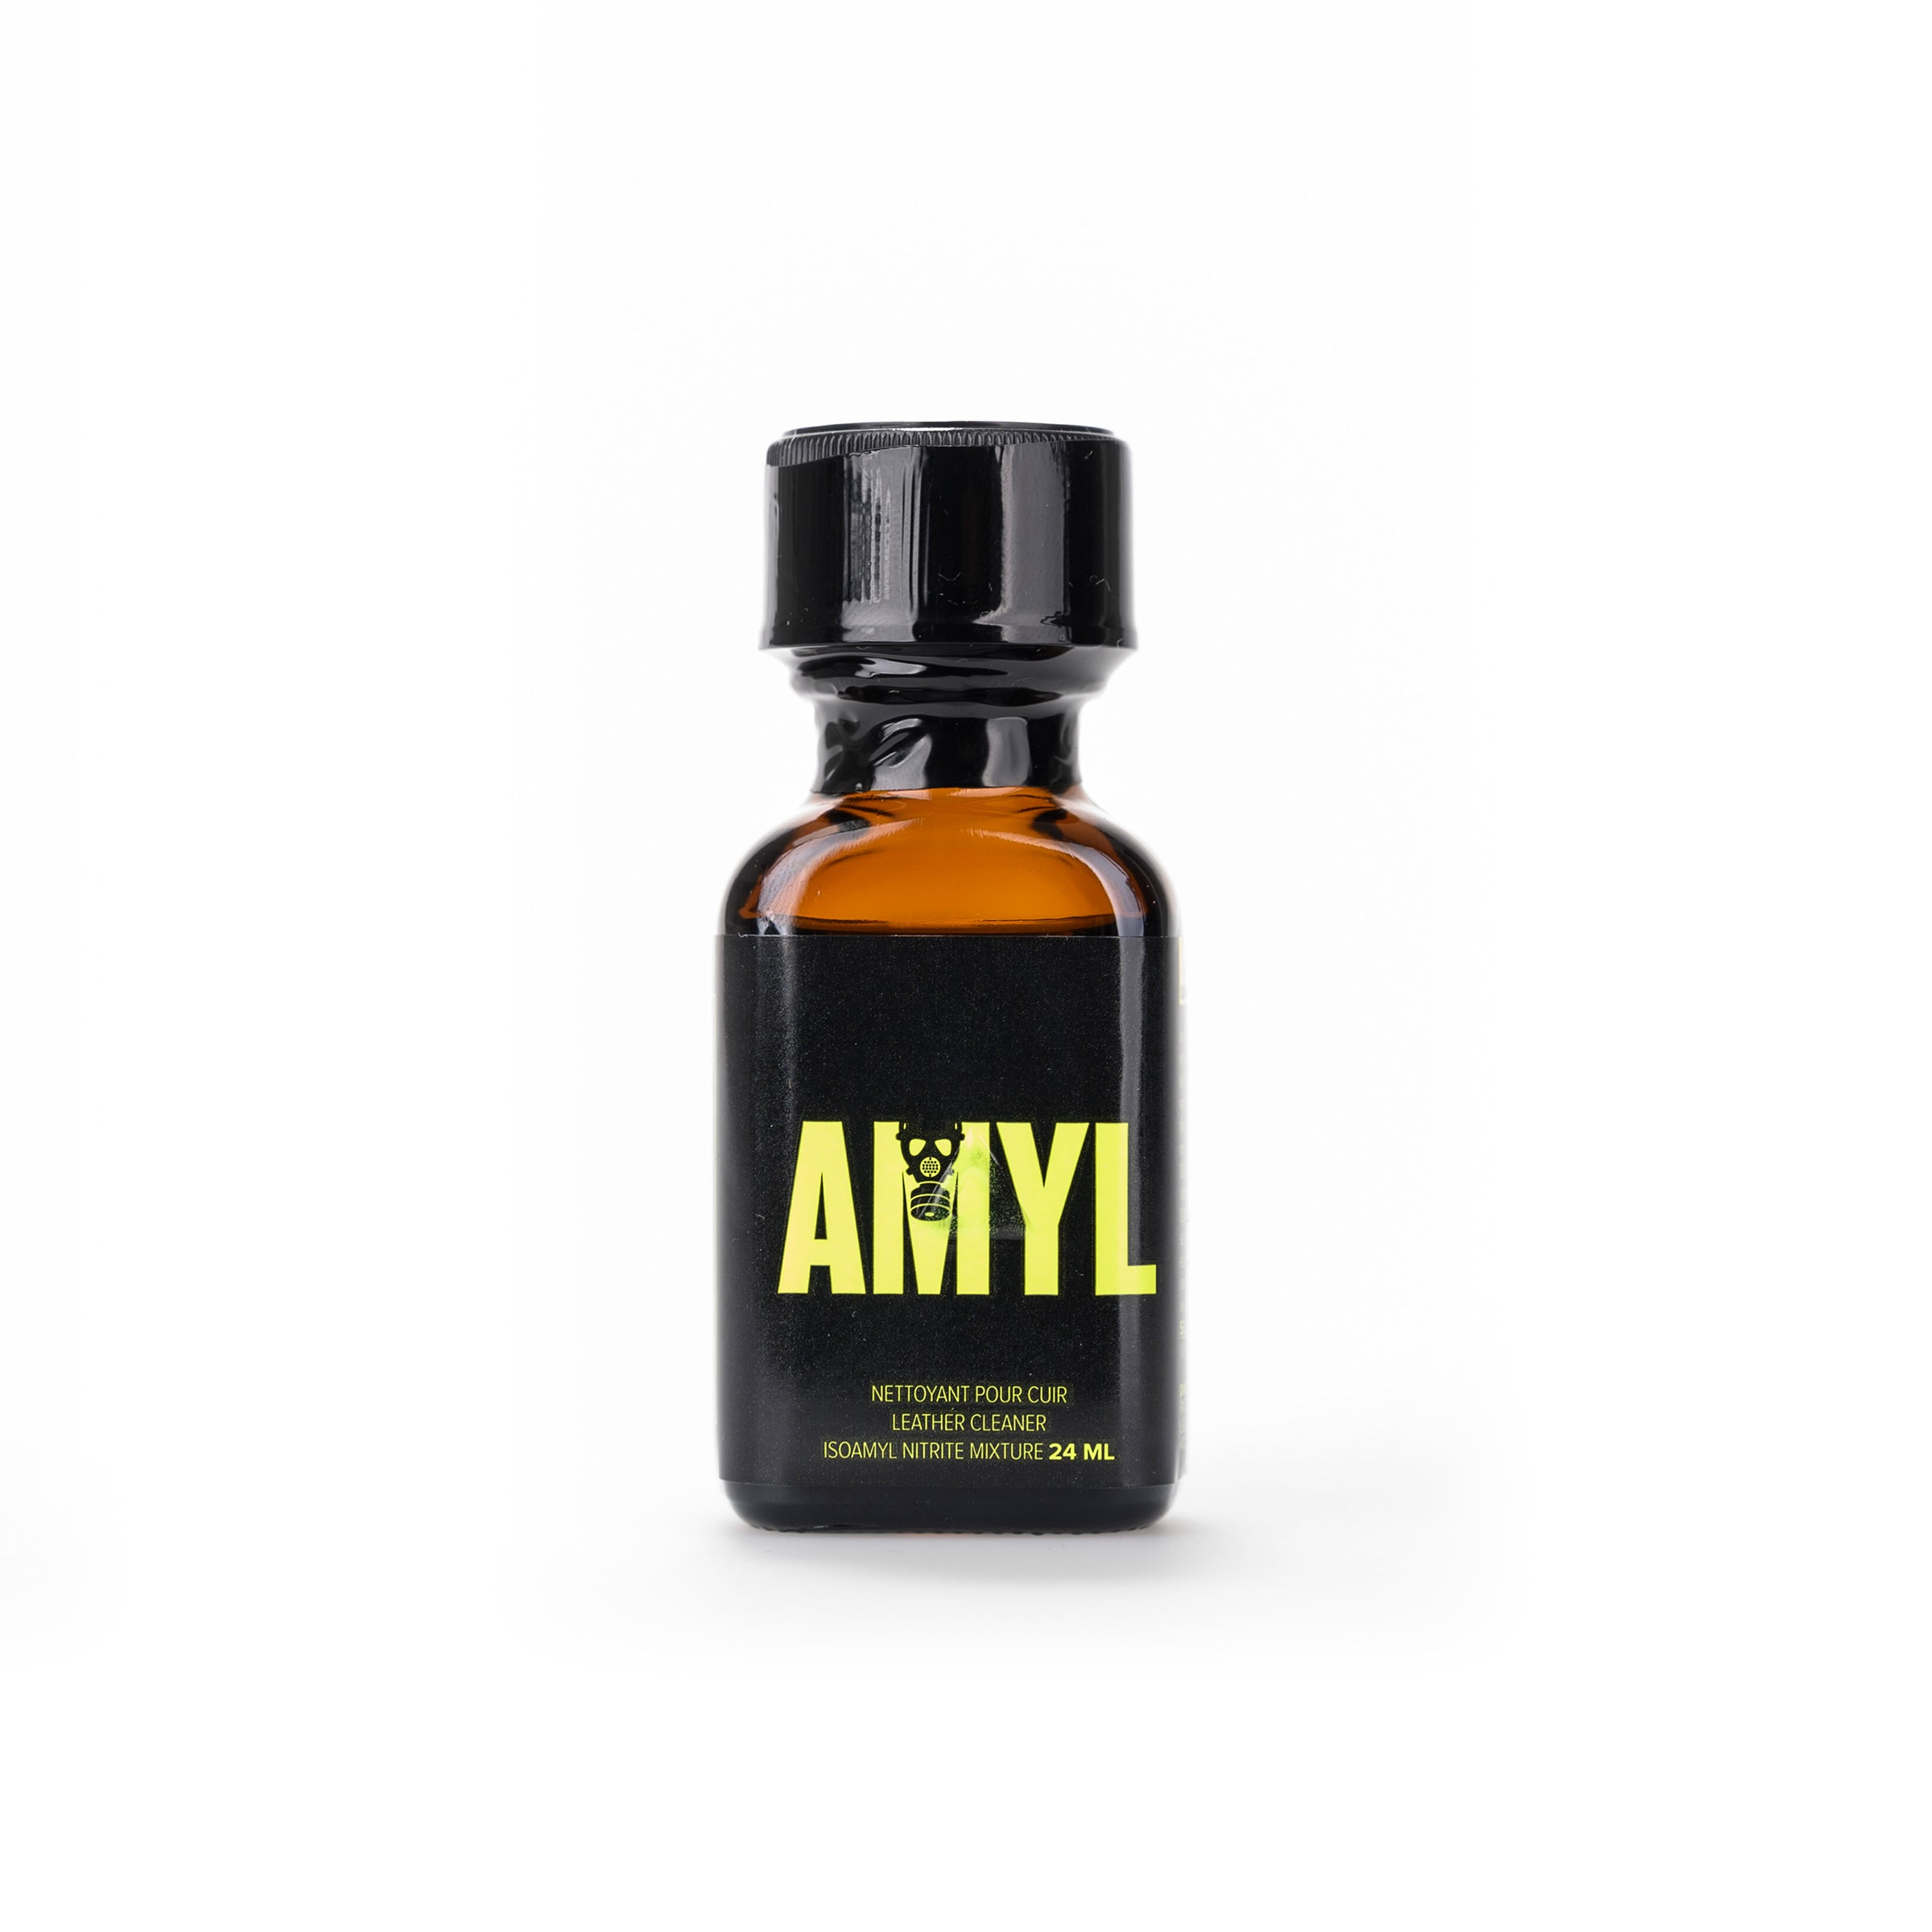 A bottle of Amyl branded poppers.